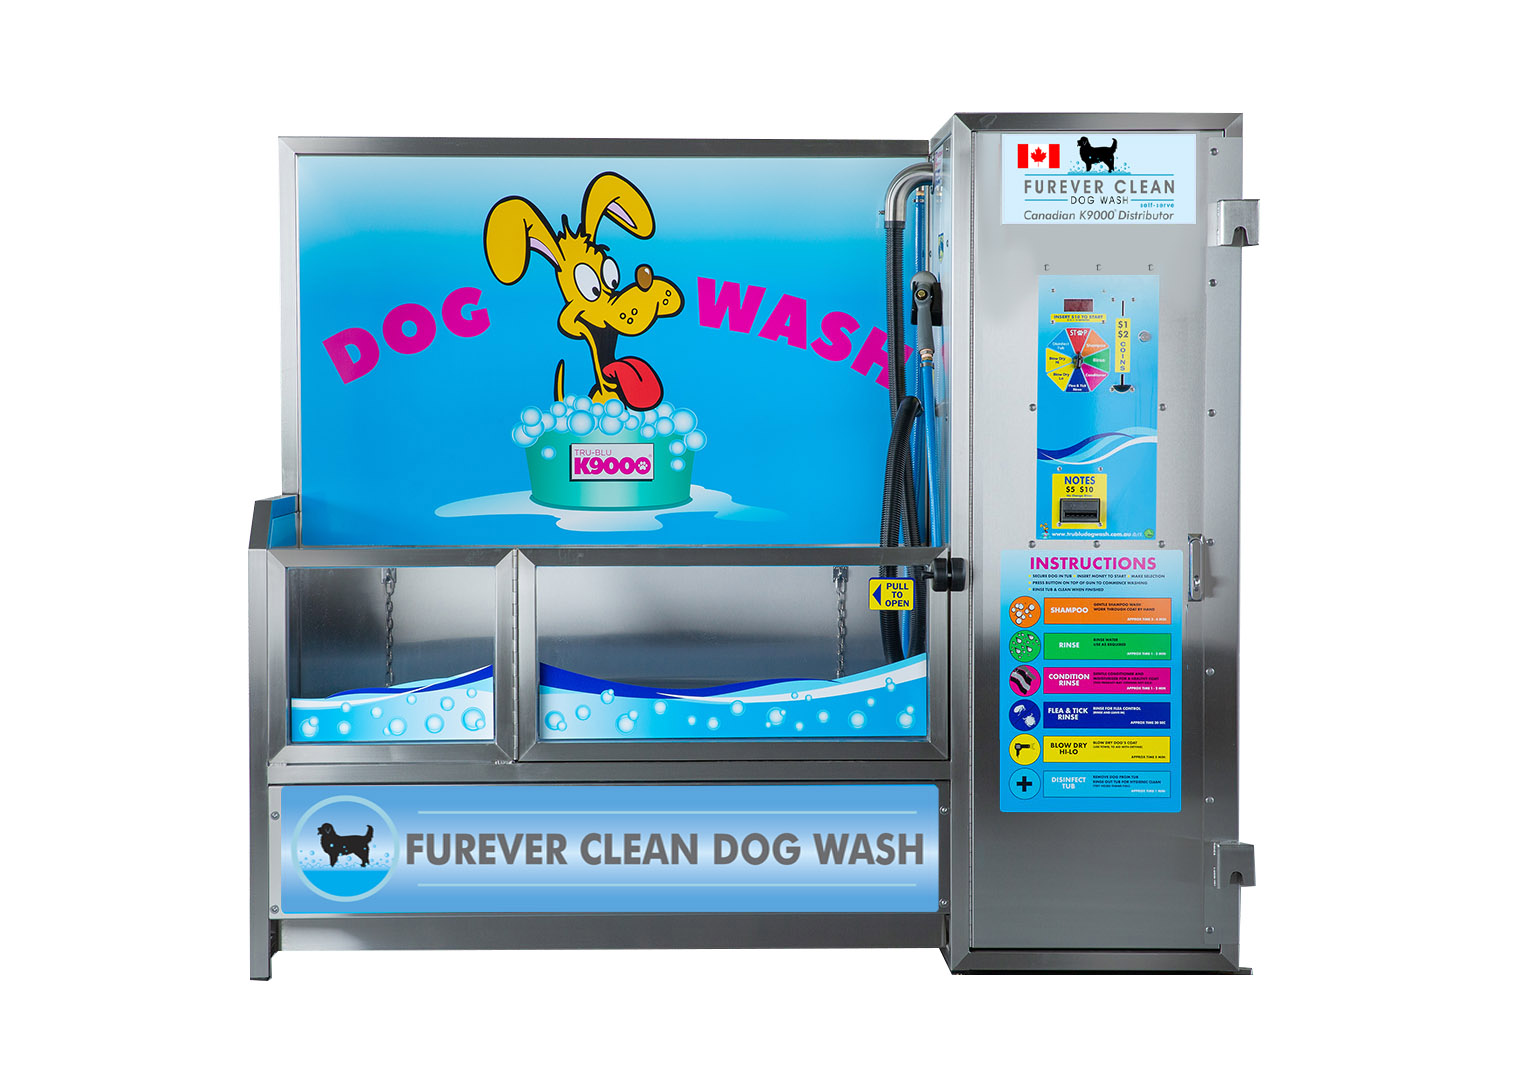 Standard K9000 dog wash